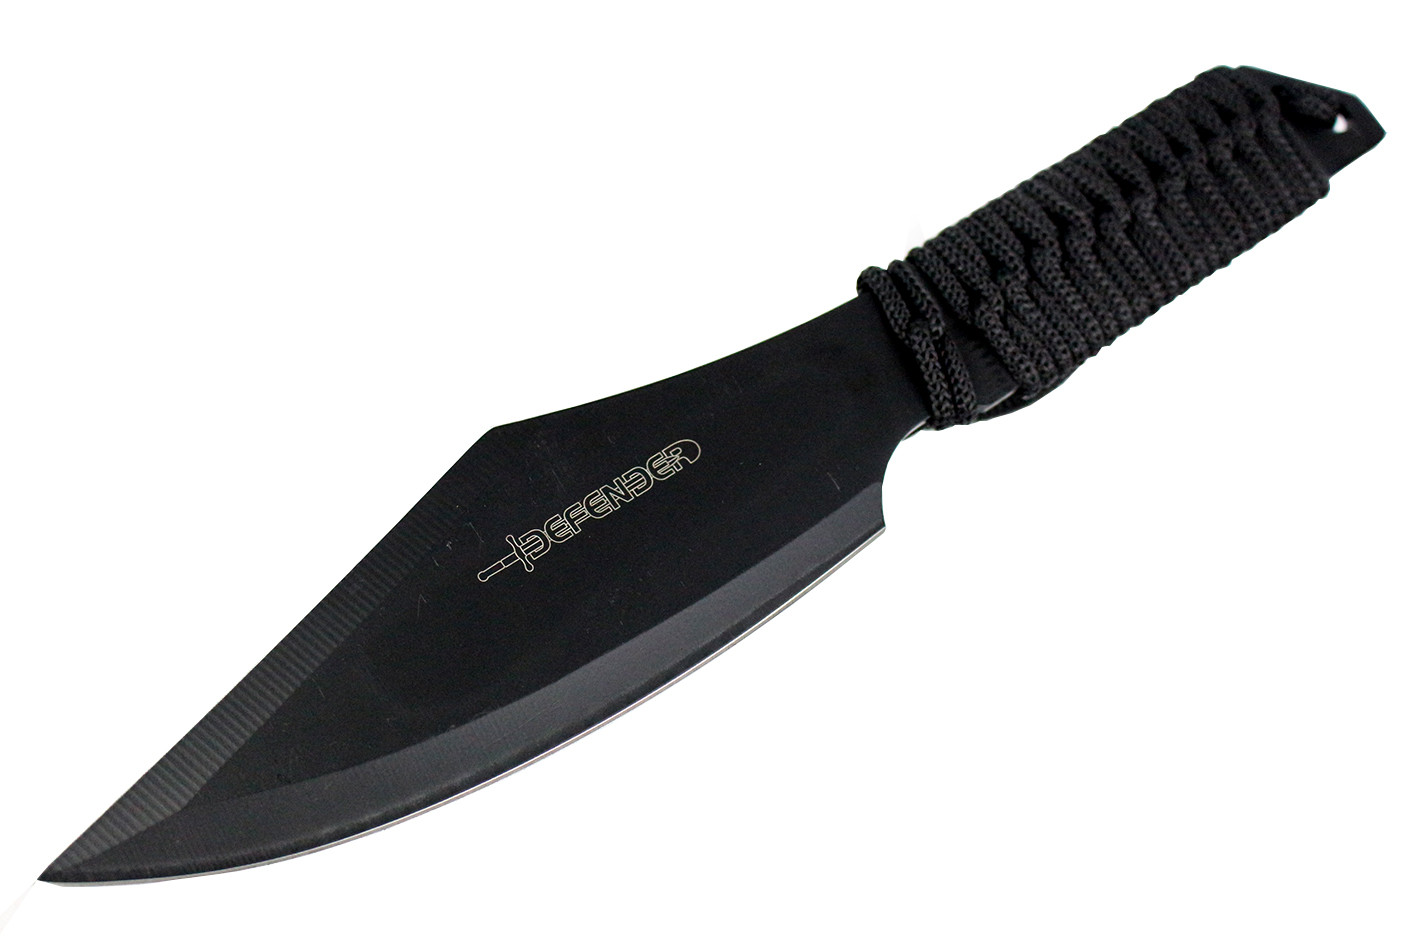 11 in. Black Chopp Blade Knife with Sheath